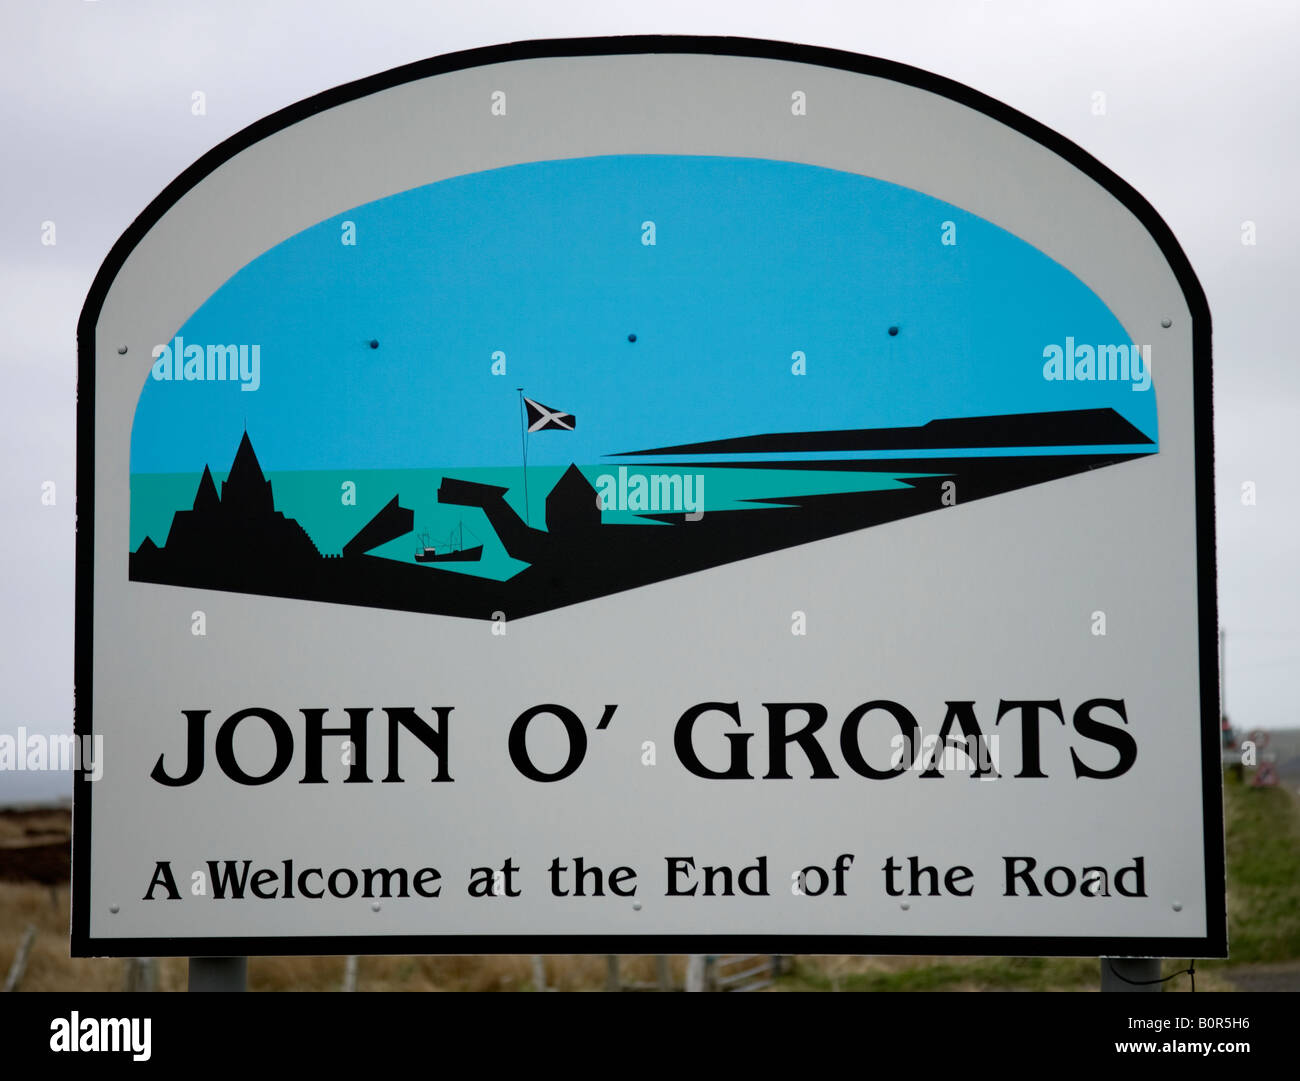 Sign for John O' Groats, Caithness, Scotland, UK., Europe Stock Photo